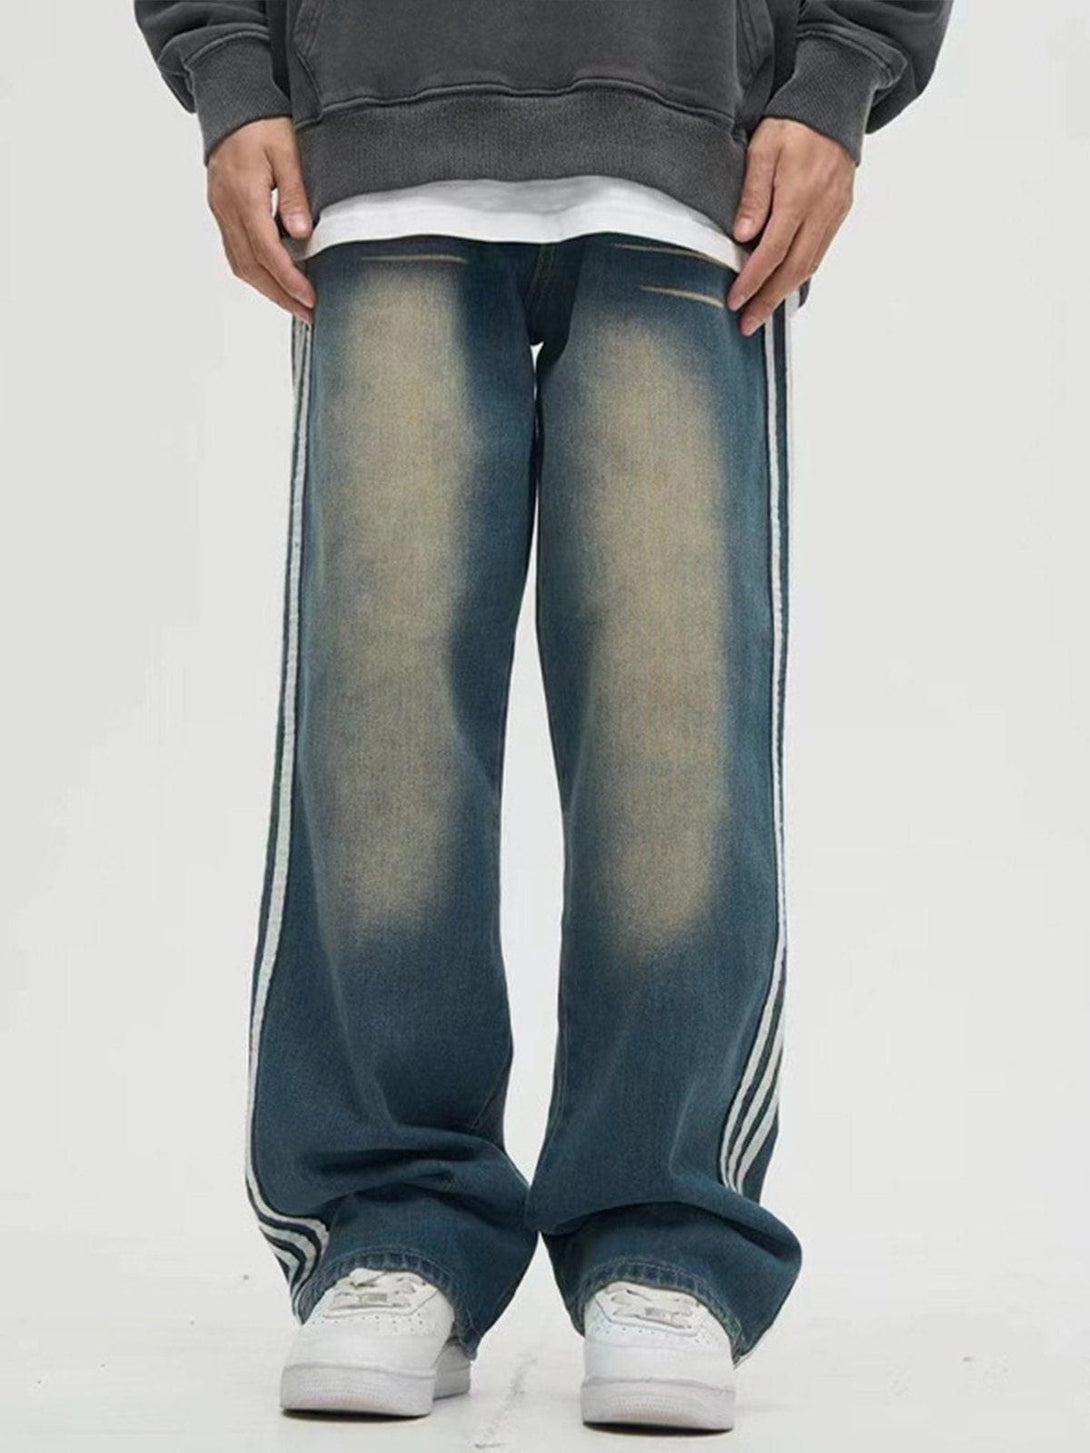 Levefly - Stripe Washed Jeans - Streetwear Fashion - levefly.com